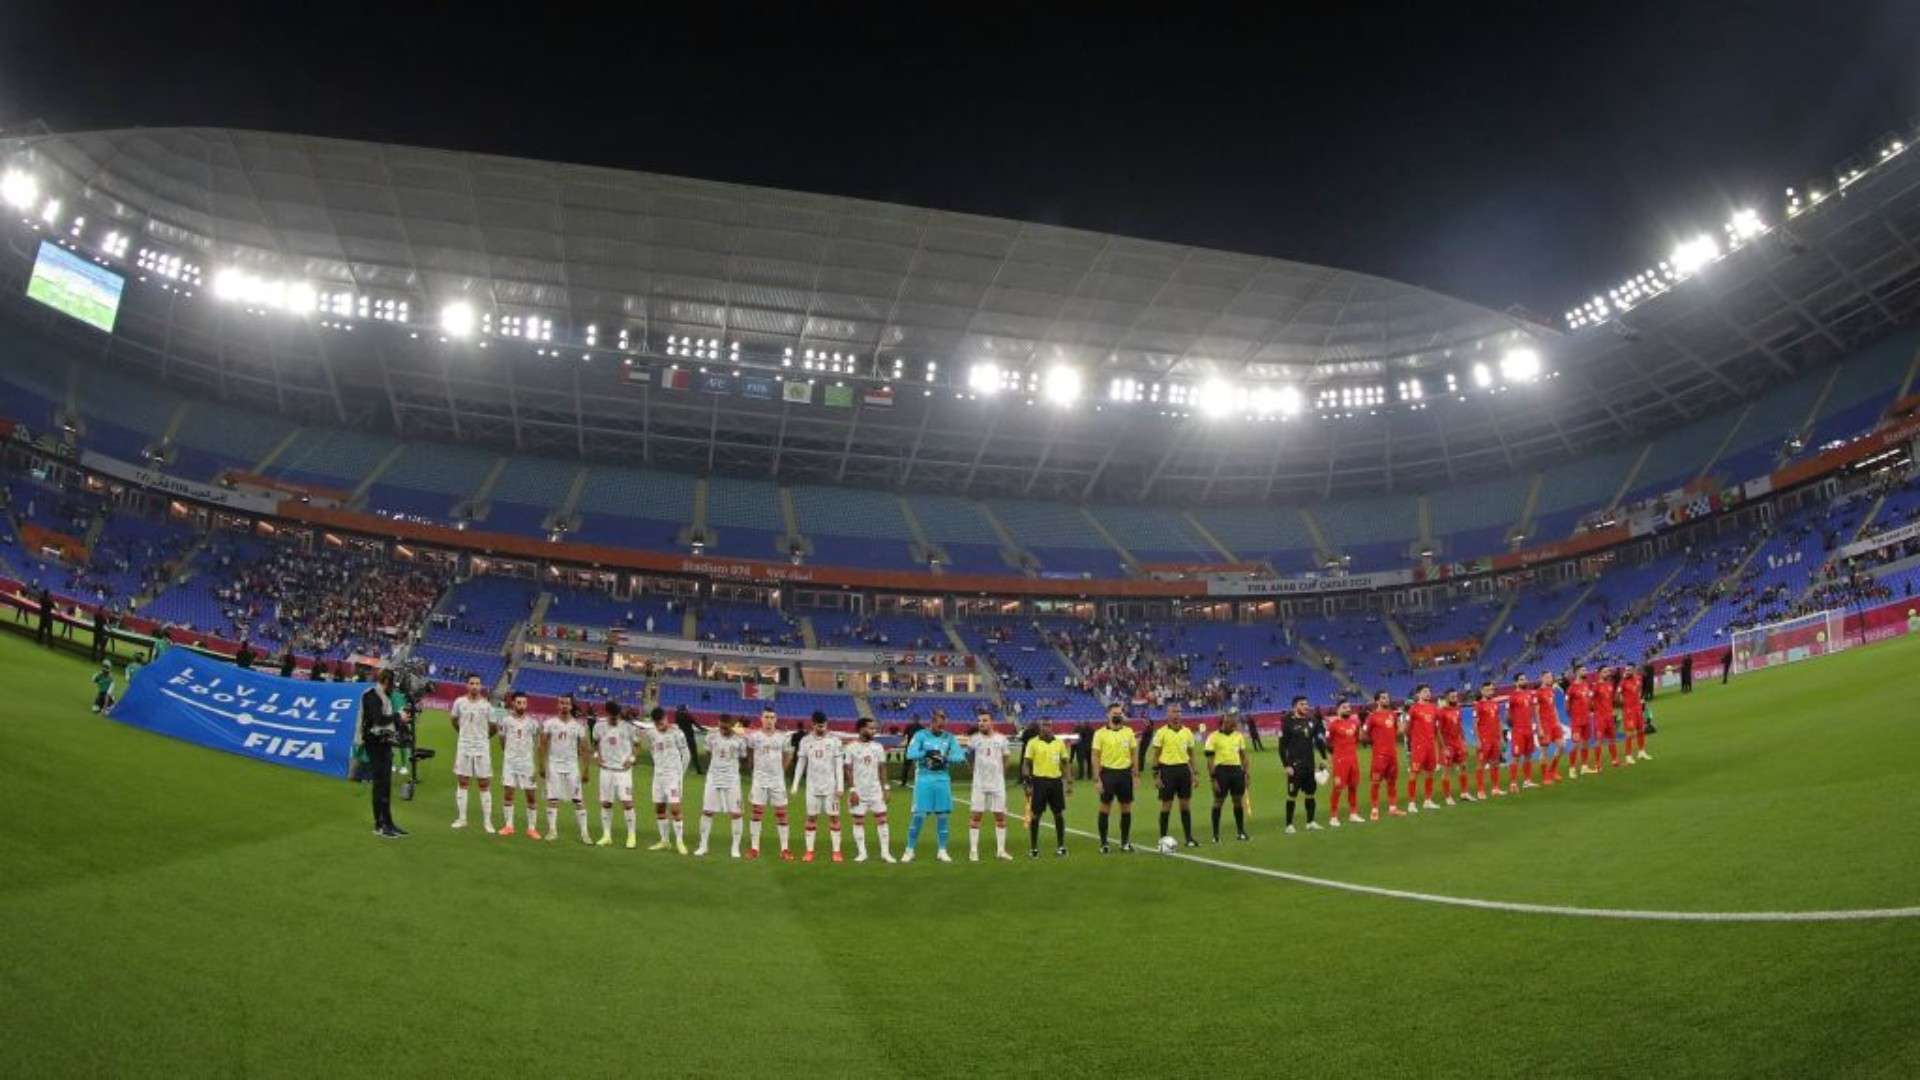 Partido Emiratos Árabes Unidos vs Siria en el Estadio 974 Ras Abu Aboud